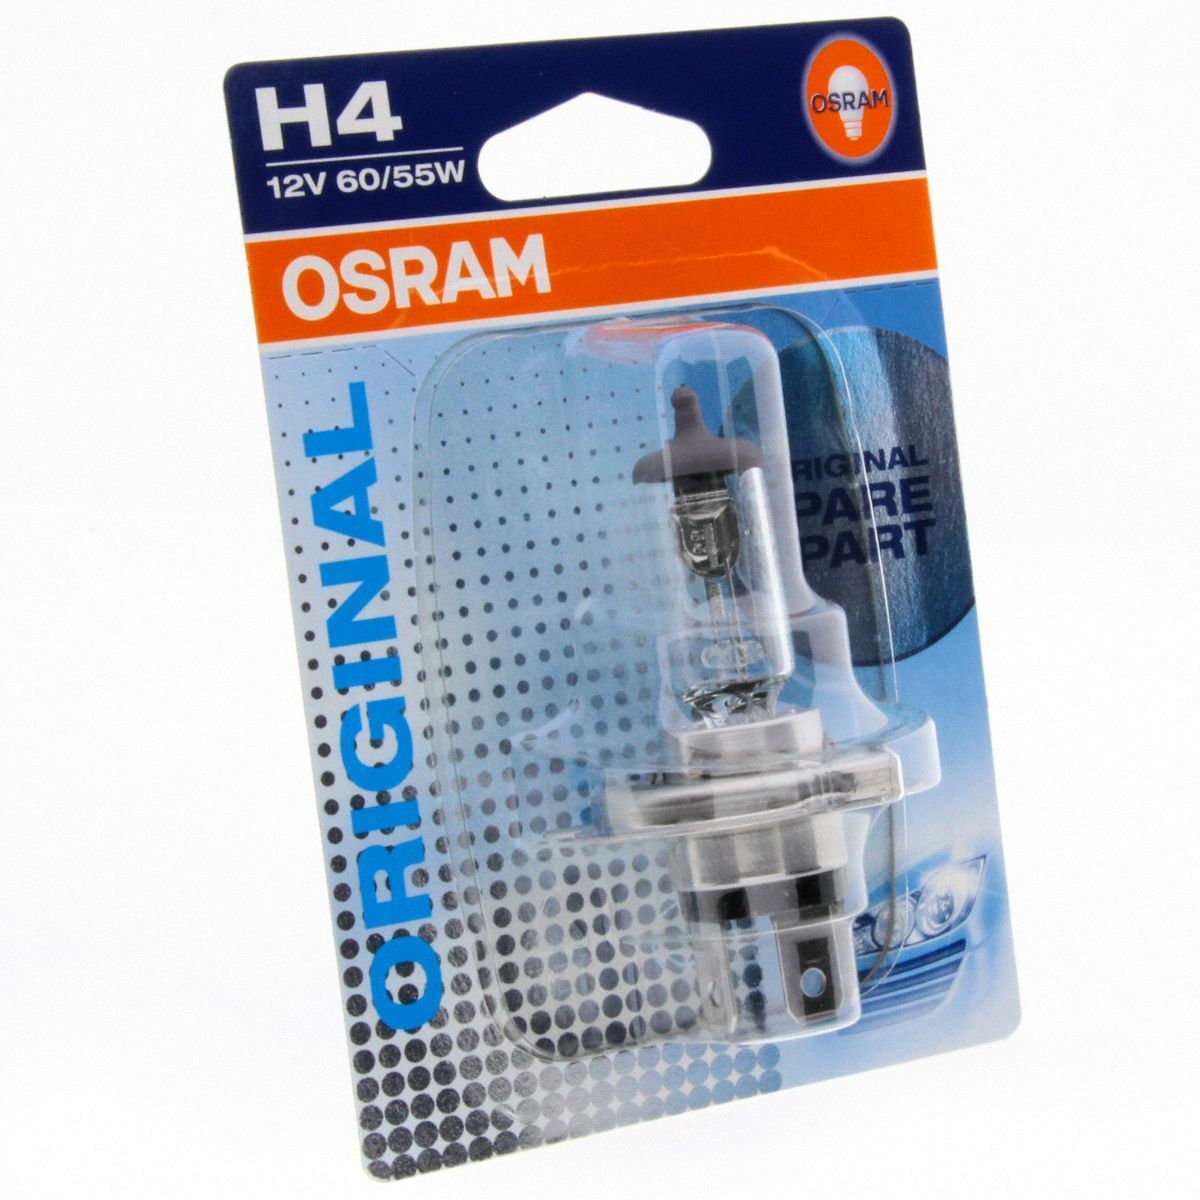 H4 OSRAM Original Line OEM 64193-01B Halogenlampe Autolampe Blister Box 1 Stück